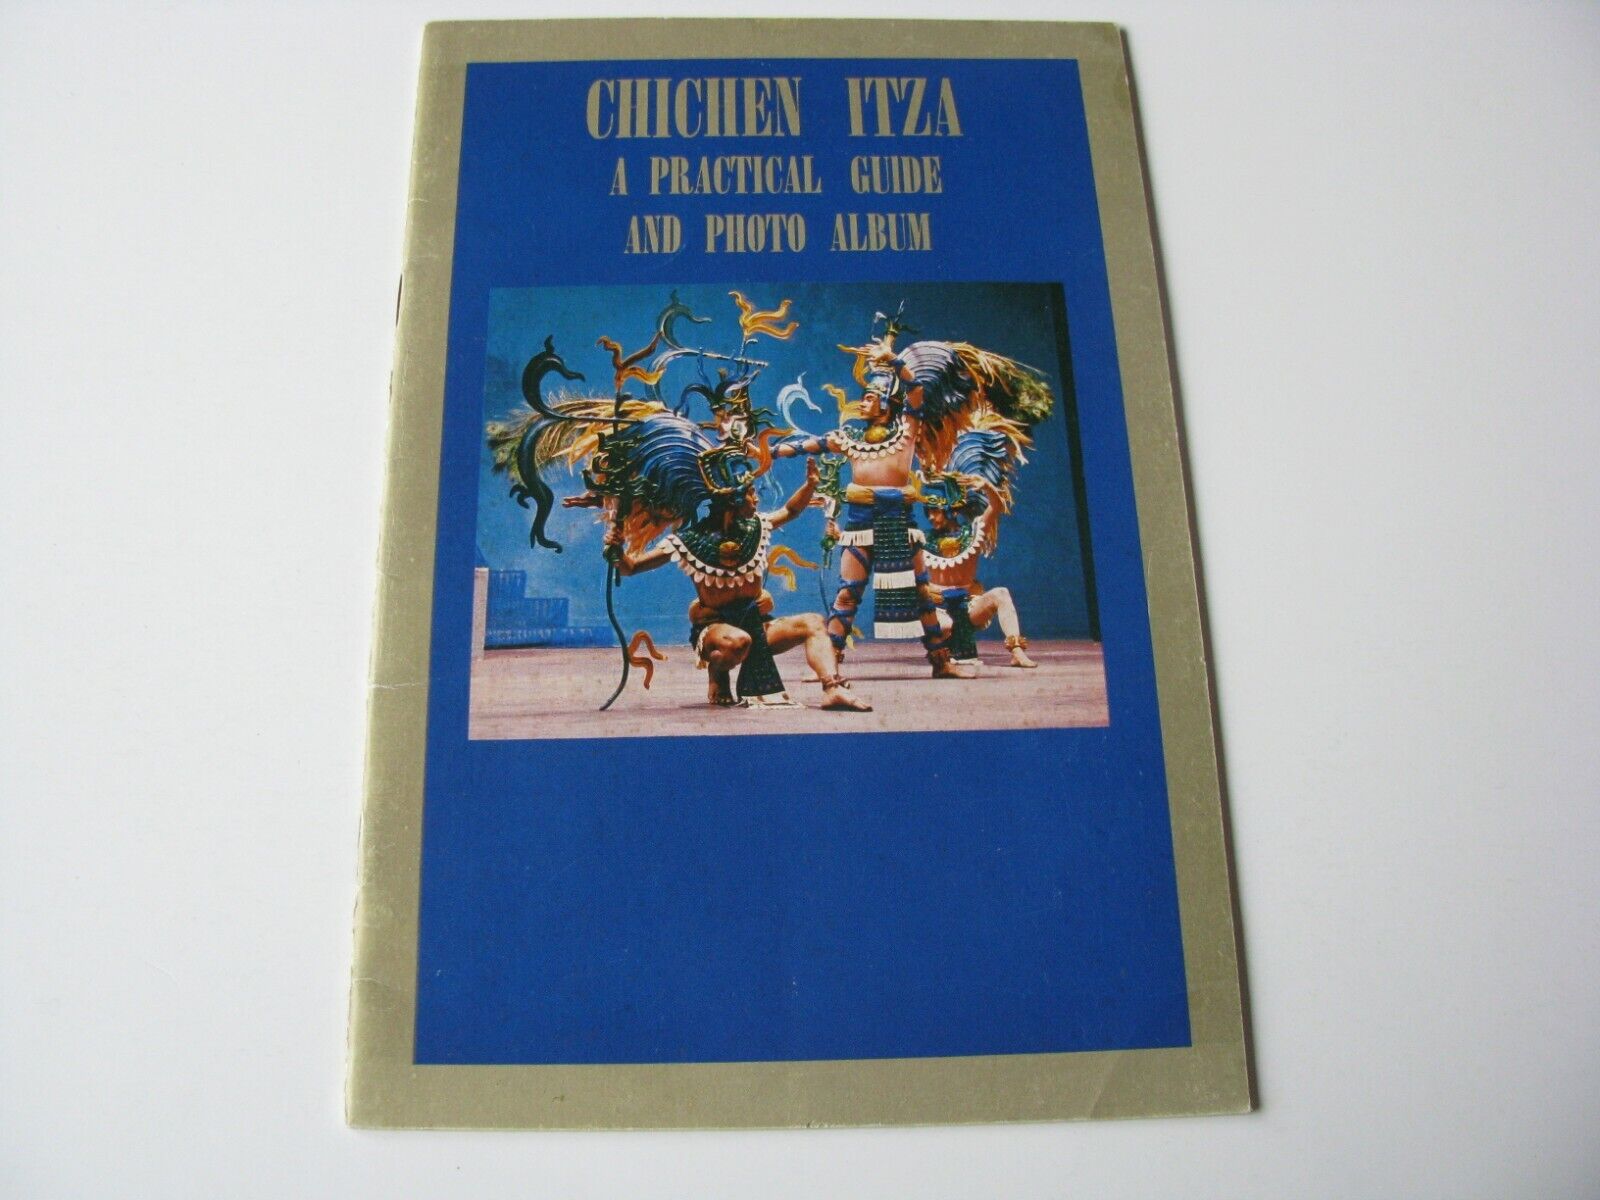 Vtg Old 1975 Chichen Itza A Practical Guide and Photo Album Mayan Yucatan Mexico